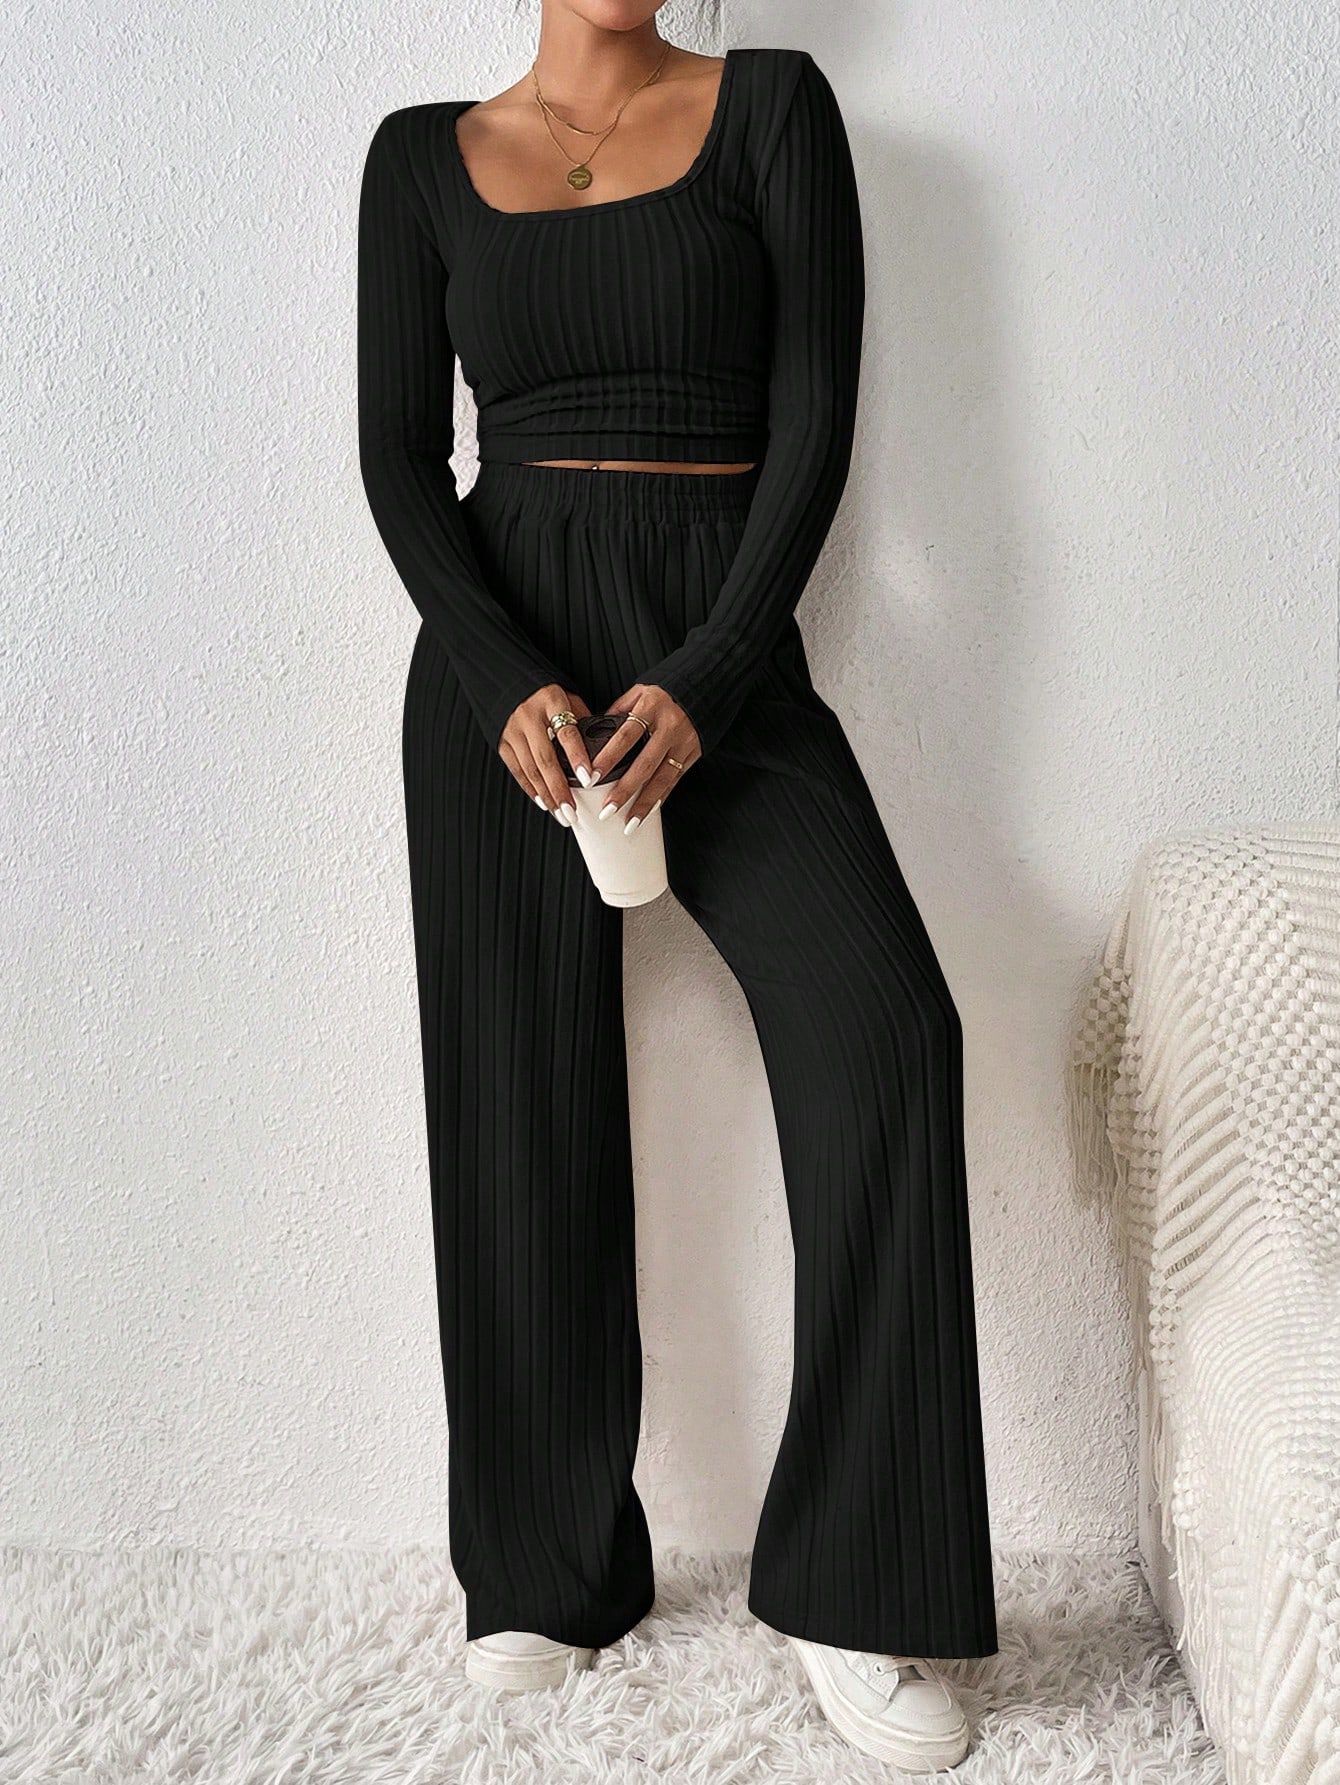 SHEIN Frenchy Women's Crop Top And Long Pants Striped Two Piece Set | SHEIN